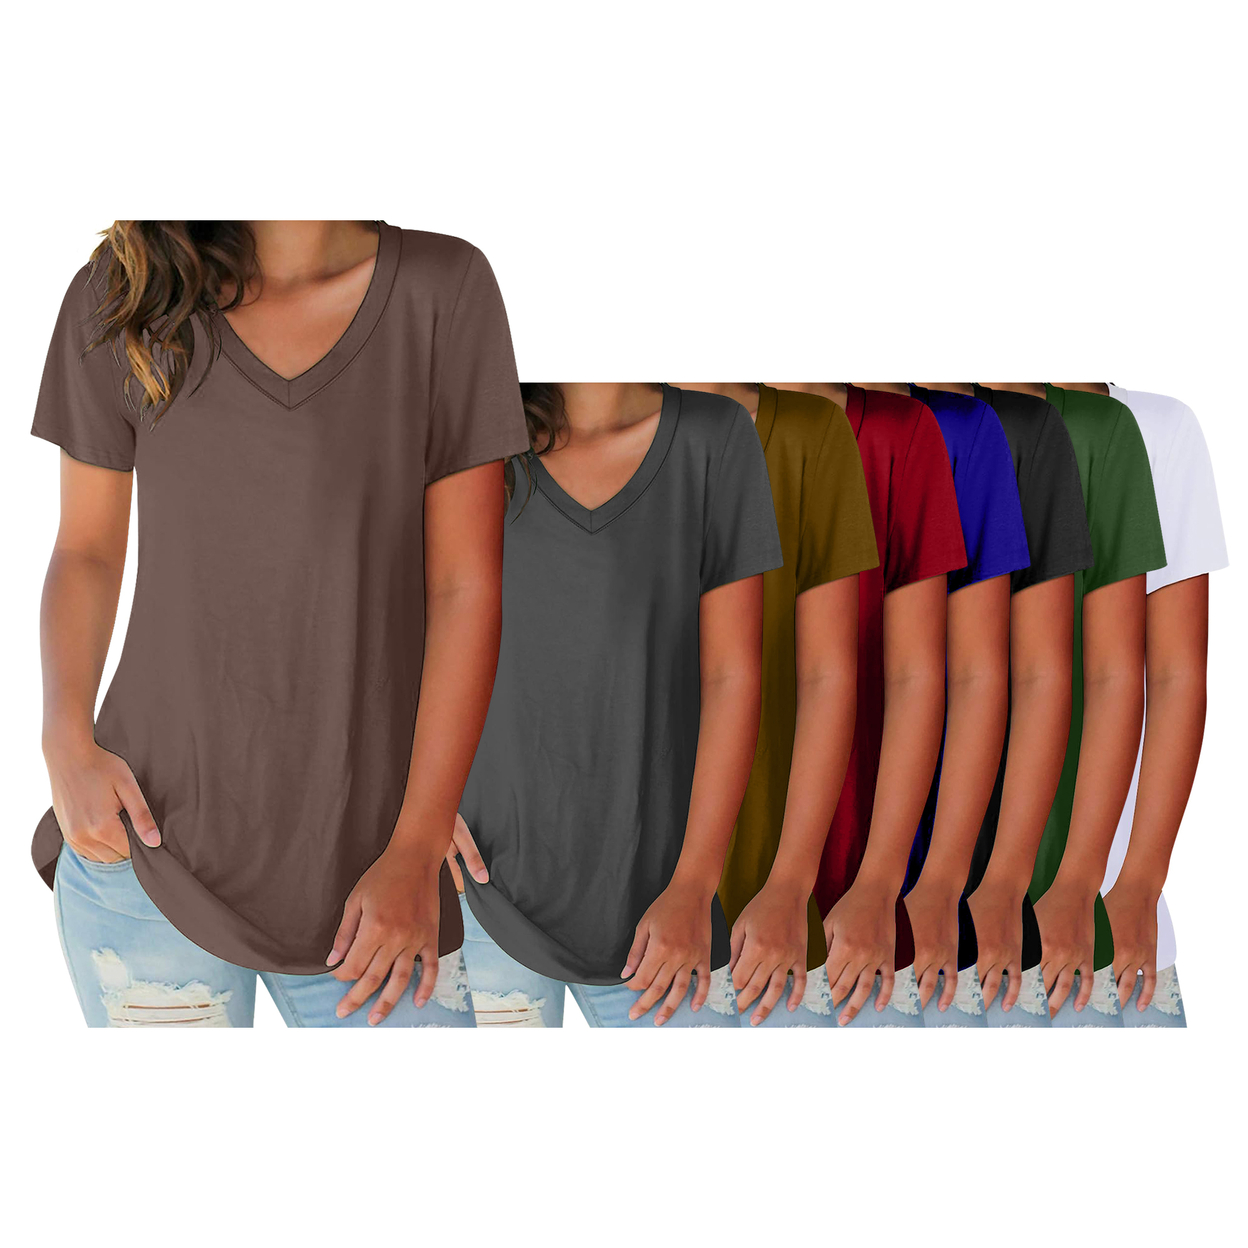 3-Pack: Women's Ultra Soft Smooth Cotton Blend Basic V-Neck Short Sleeve Shirts - Black, Navy, Grey, Medium